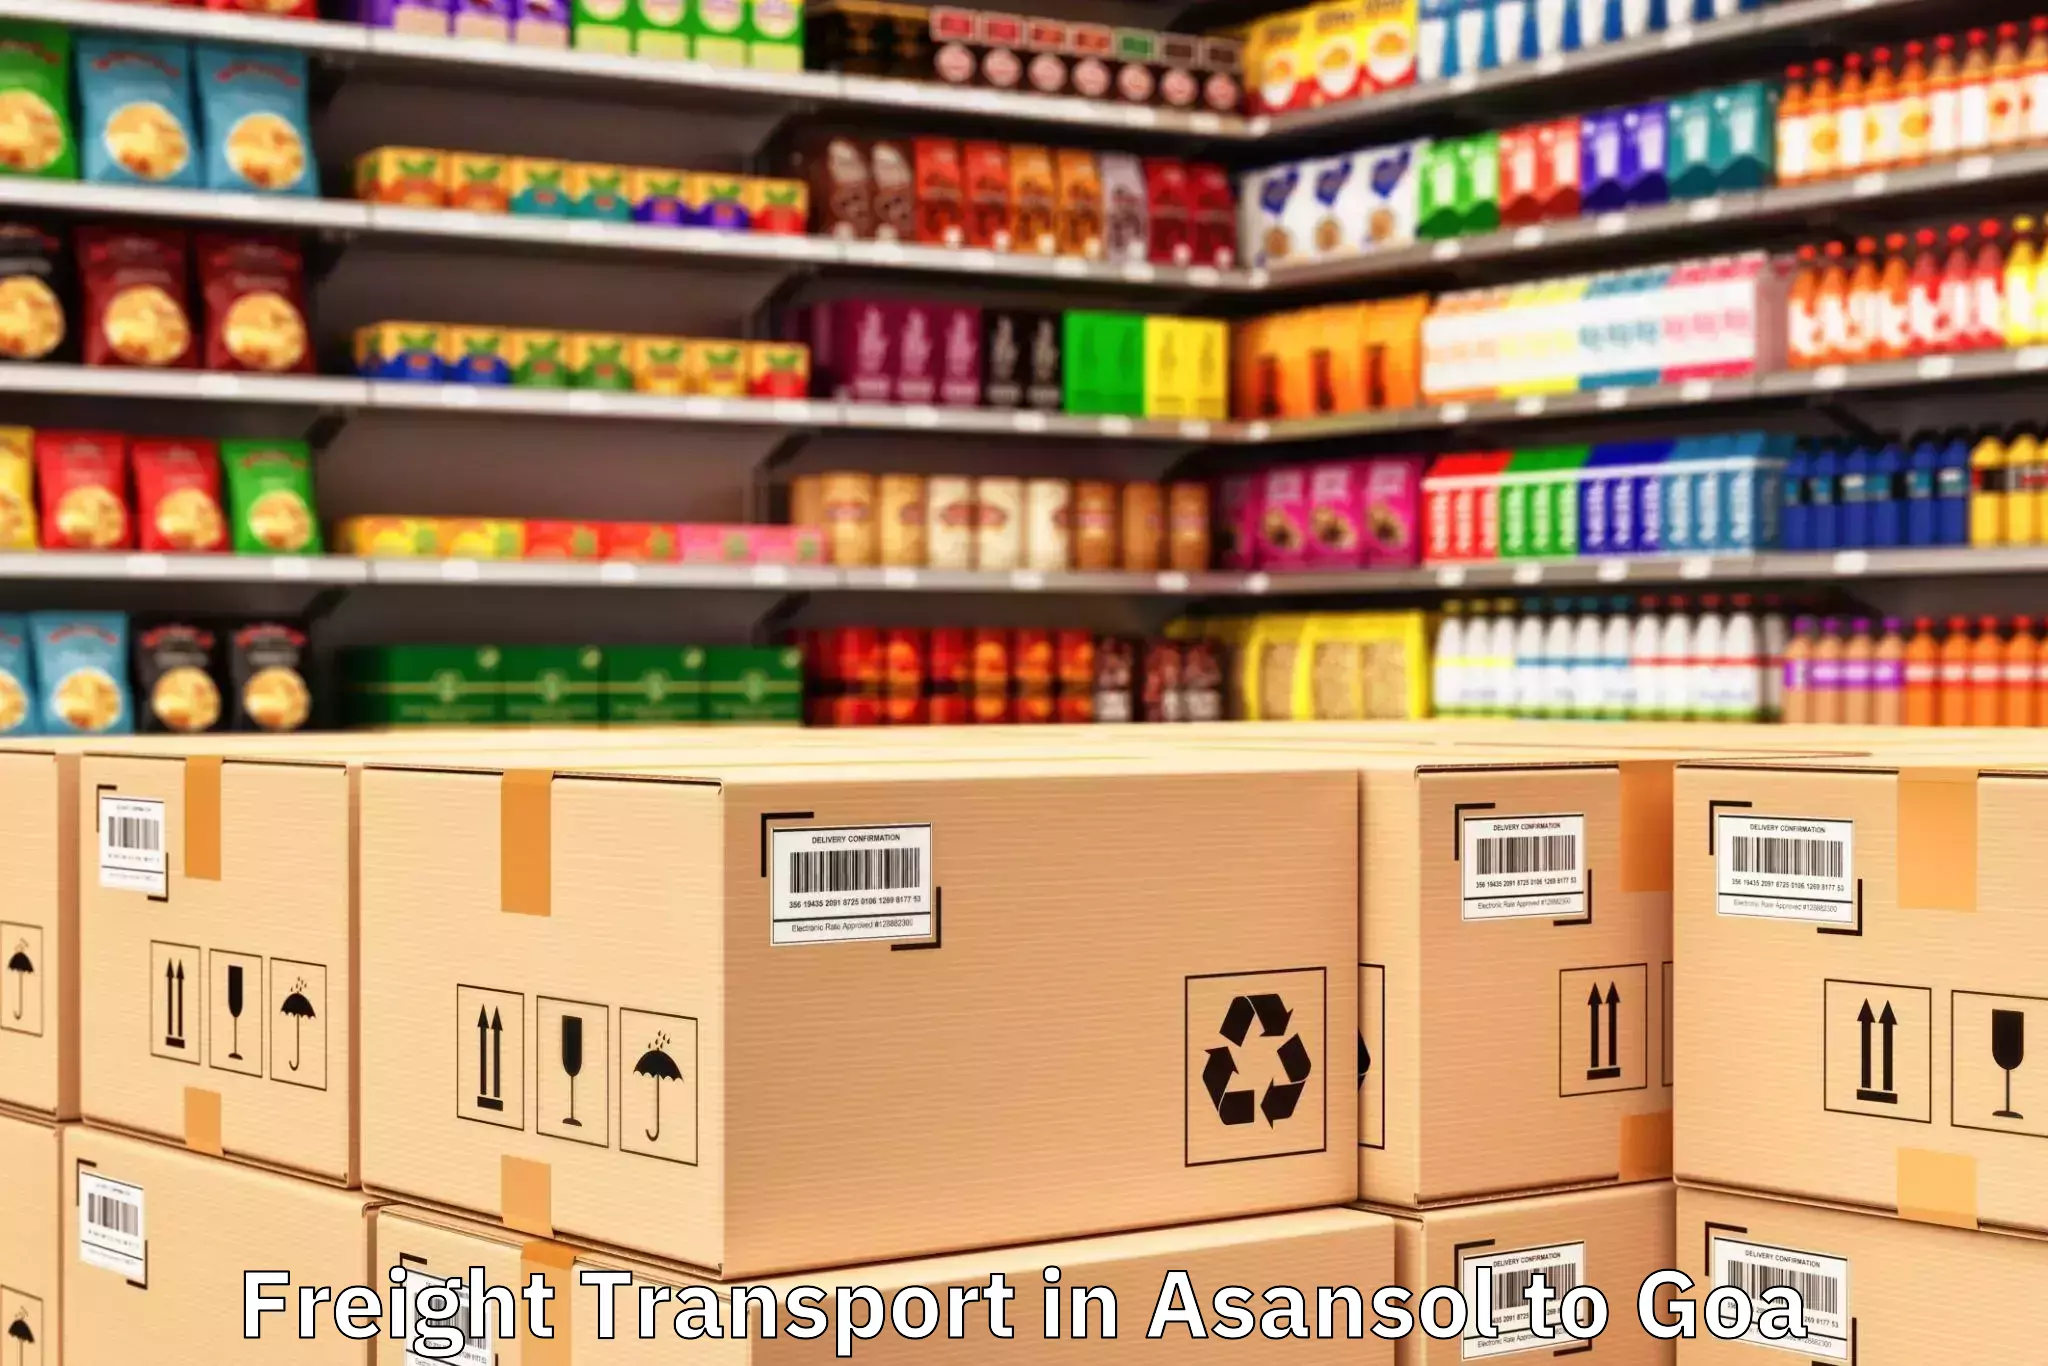 Quality Asansol to Goa Freight Transport